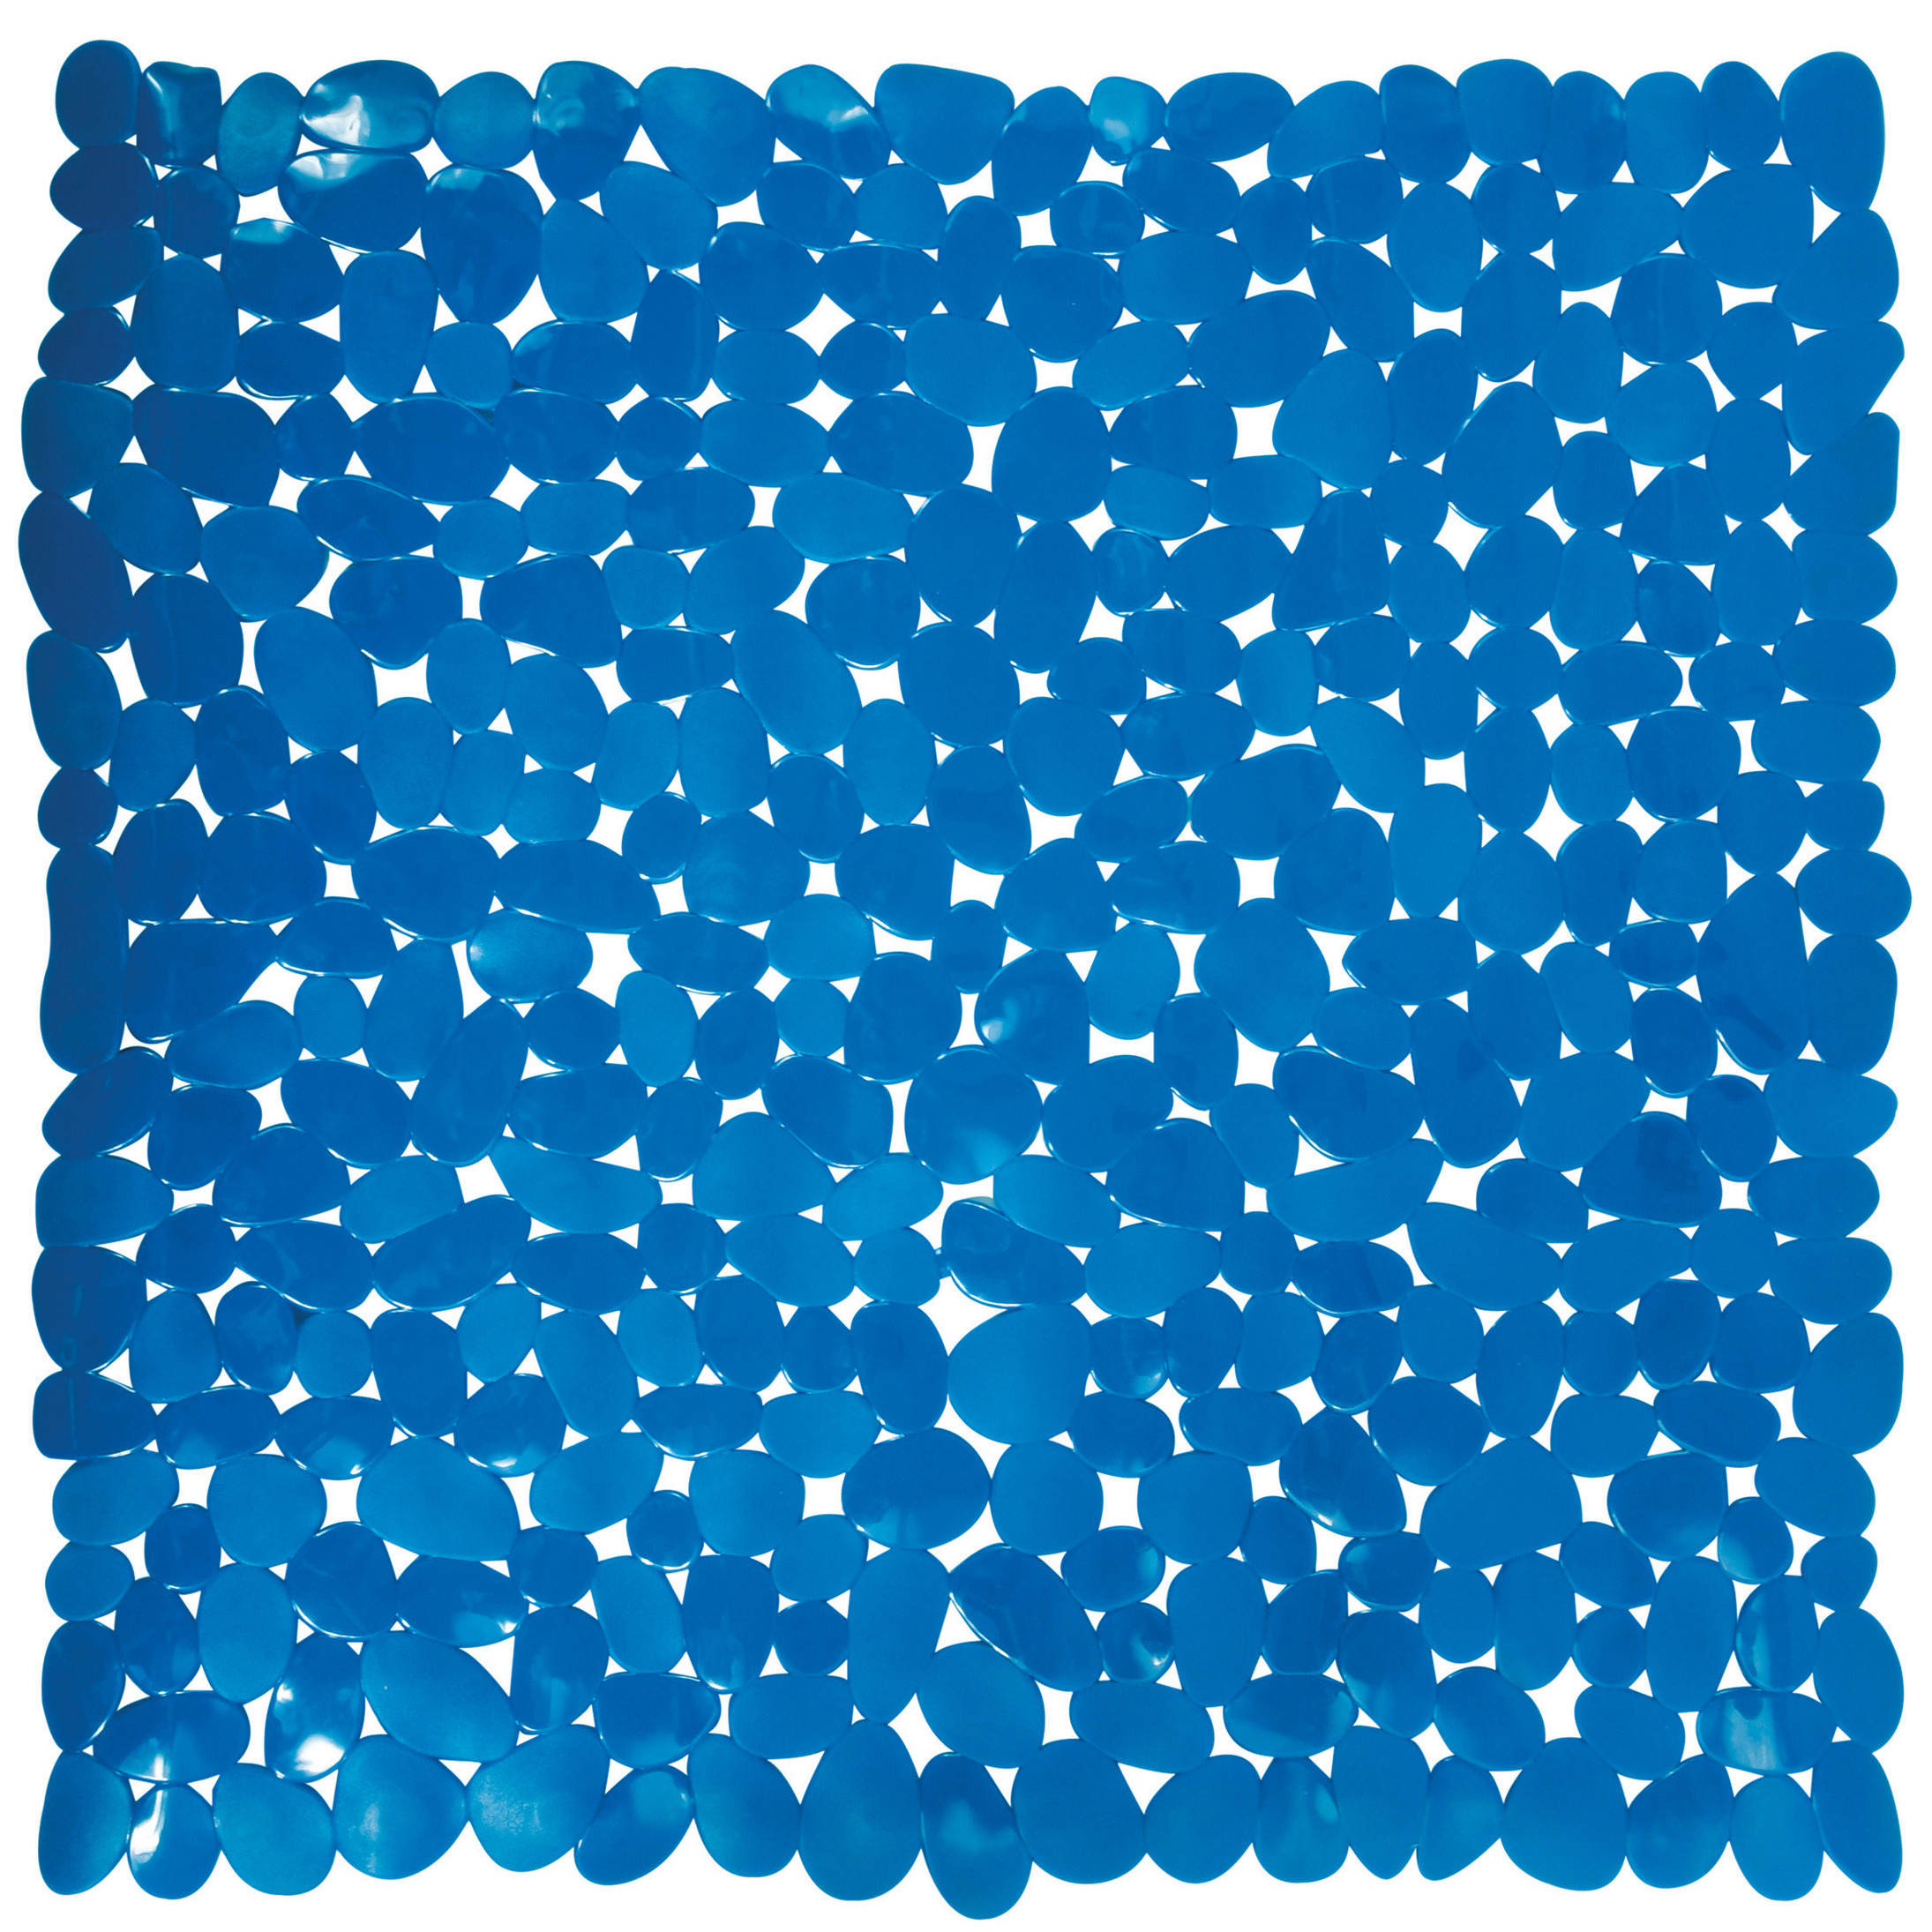 Douche-bad anti-slip mat badkamer pvc donkerblauw 54 x 54 cm vierkant